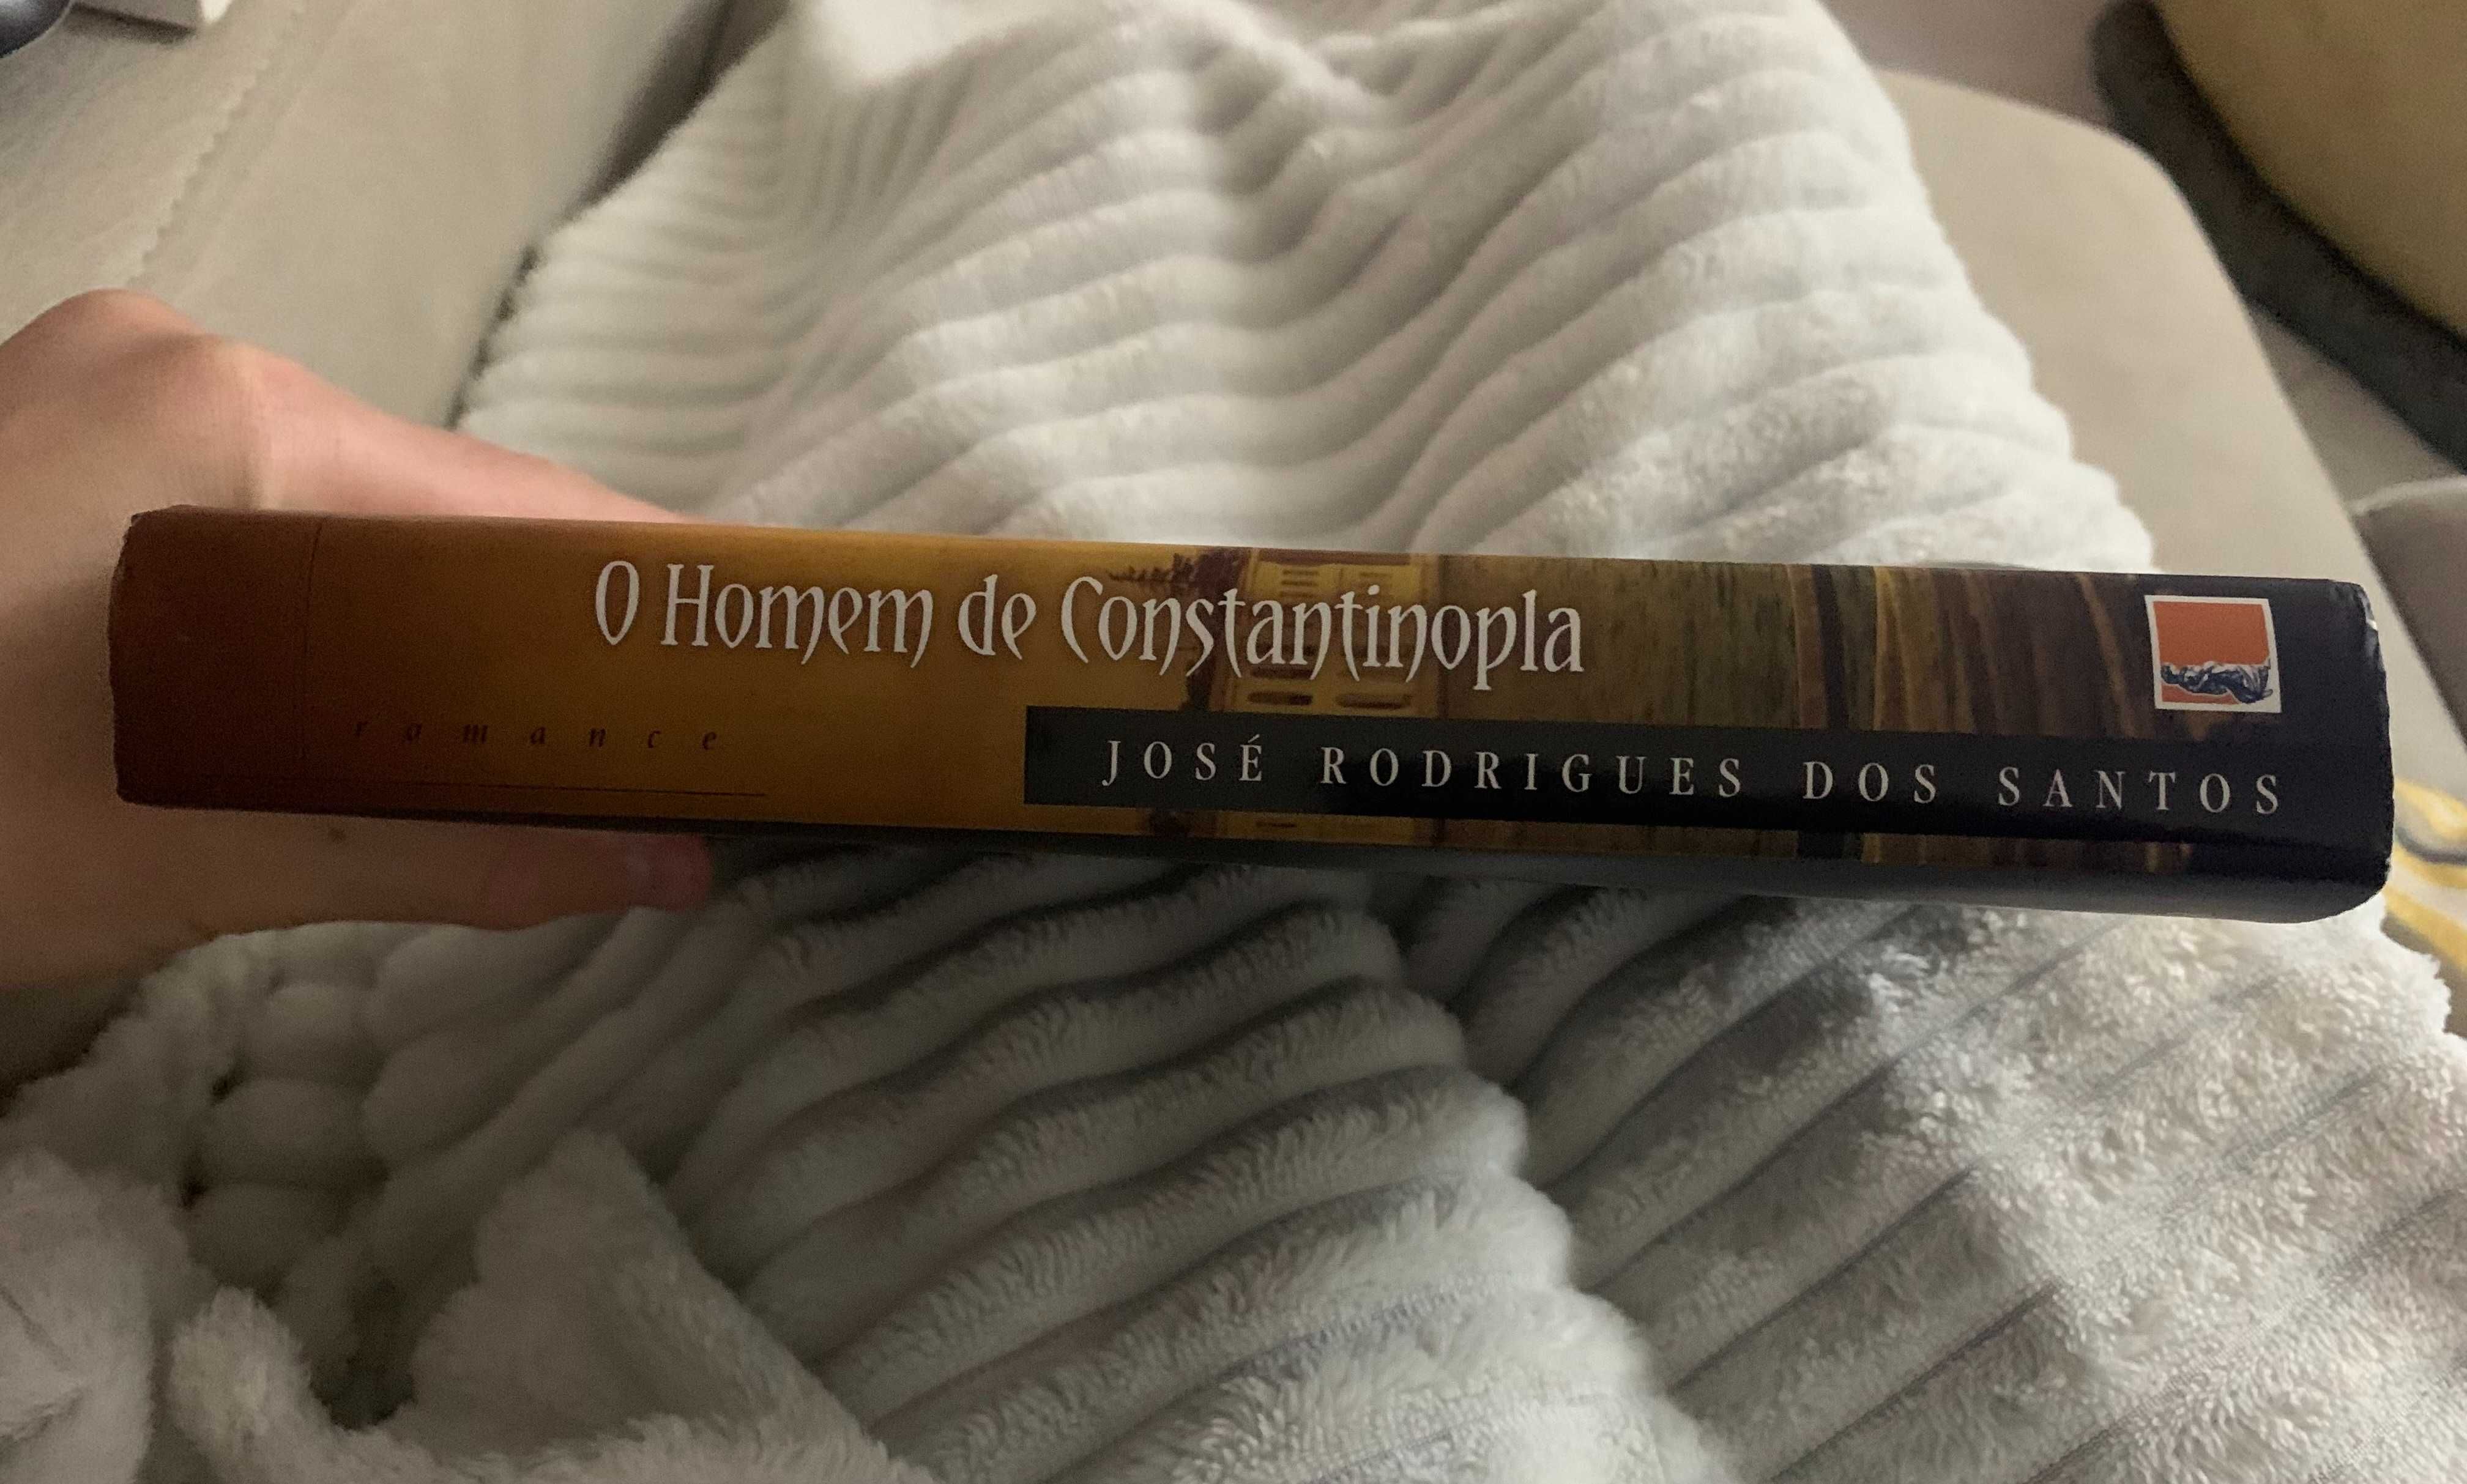 José Rodrigues dos Santos - O Homem de Constantinopla